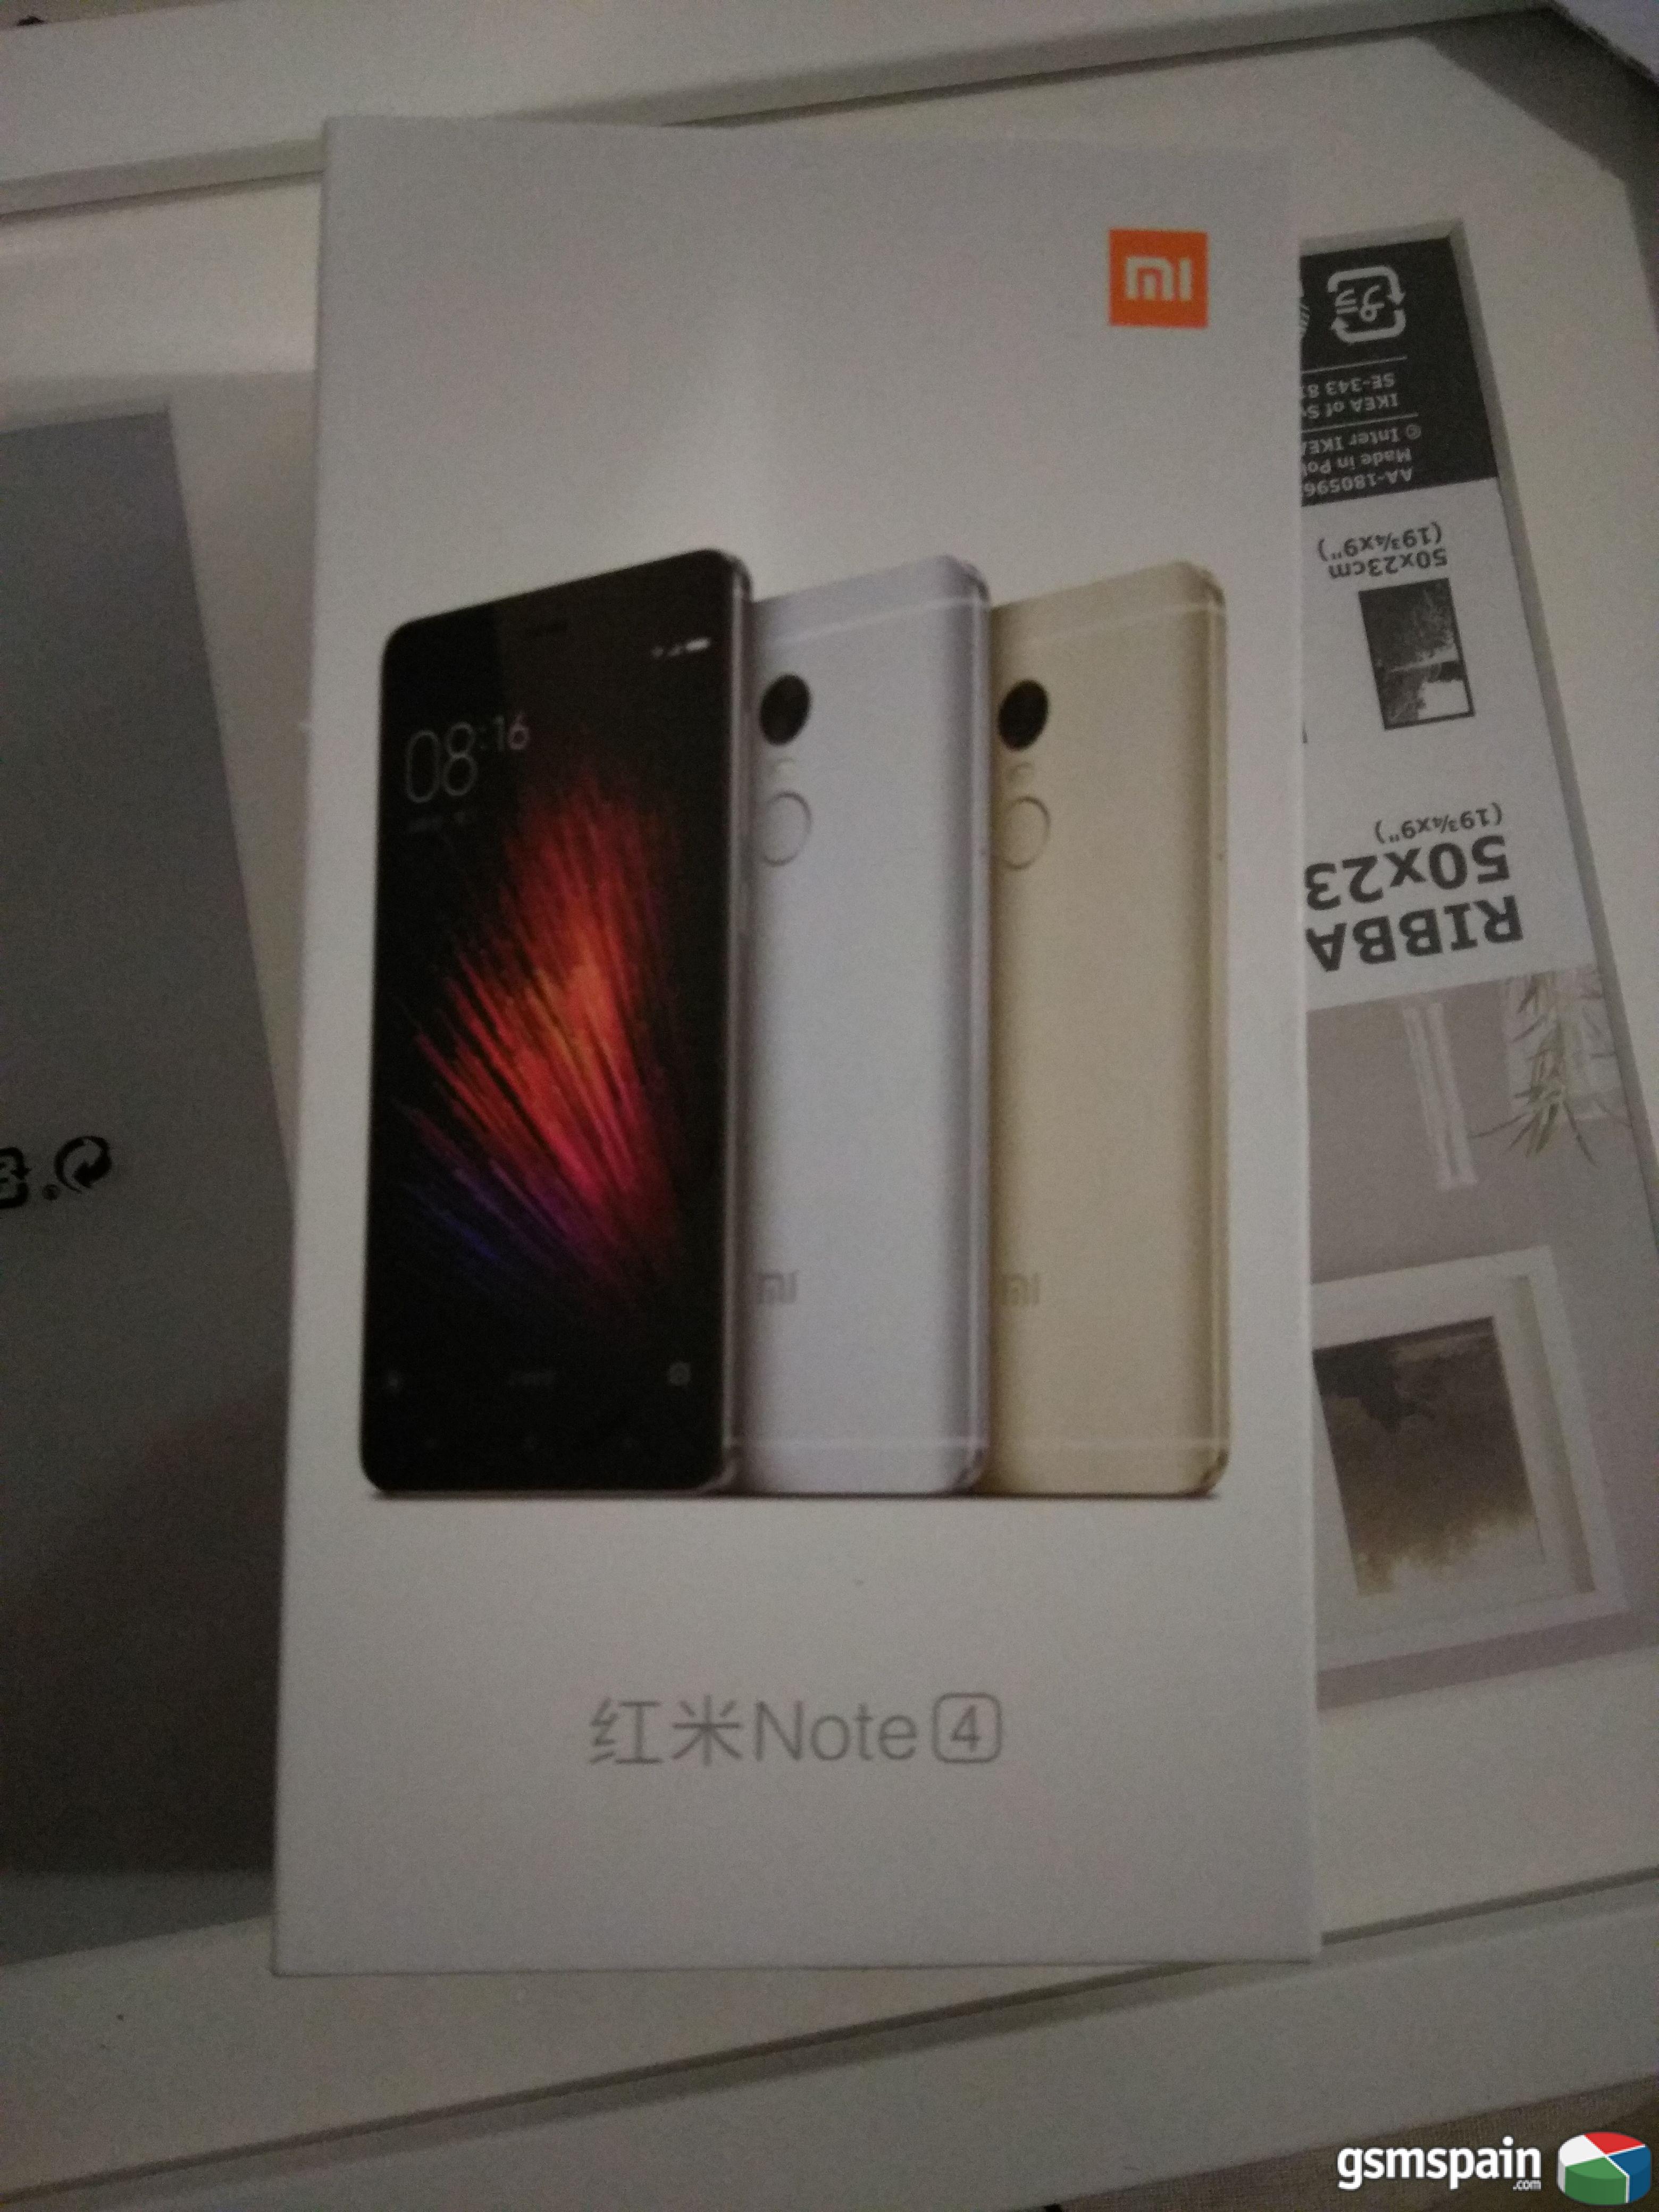 [VENDO] Xiaomi redmi note 4 modelo 3gb 64gb, nuevo a estrenar.